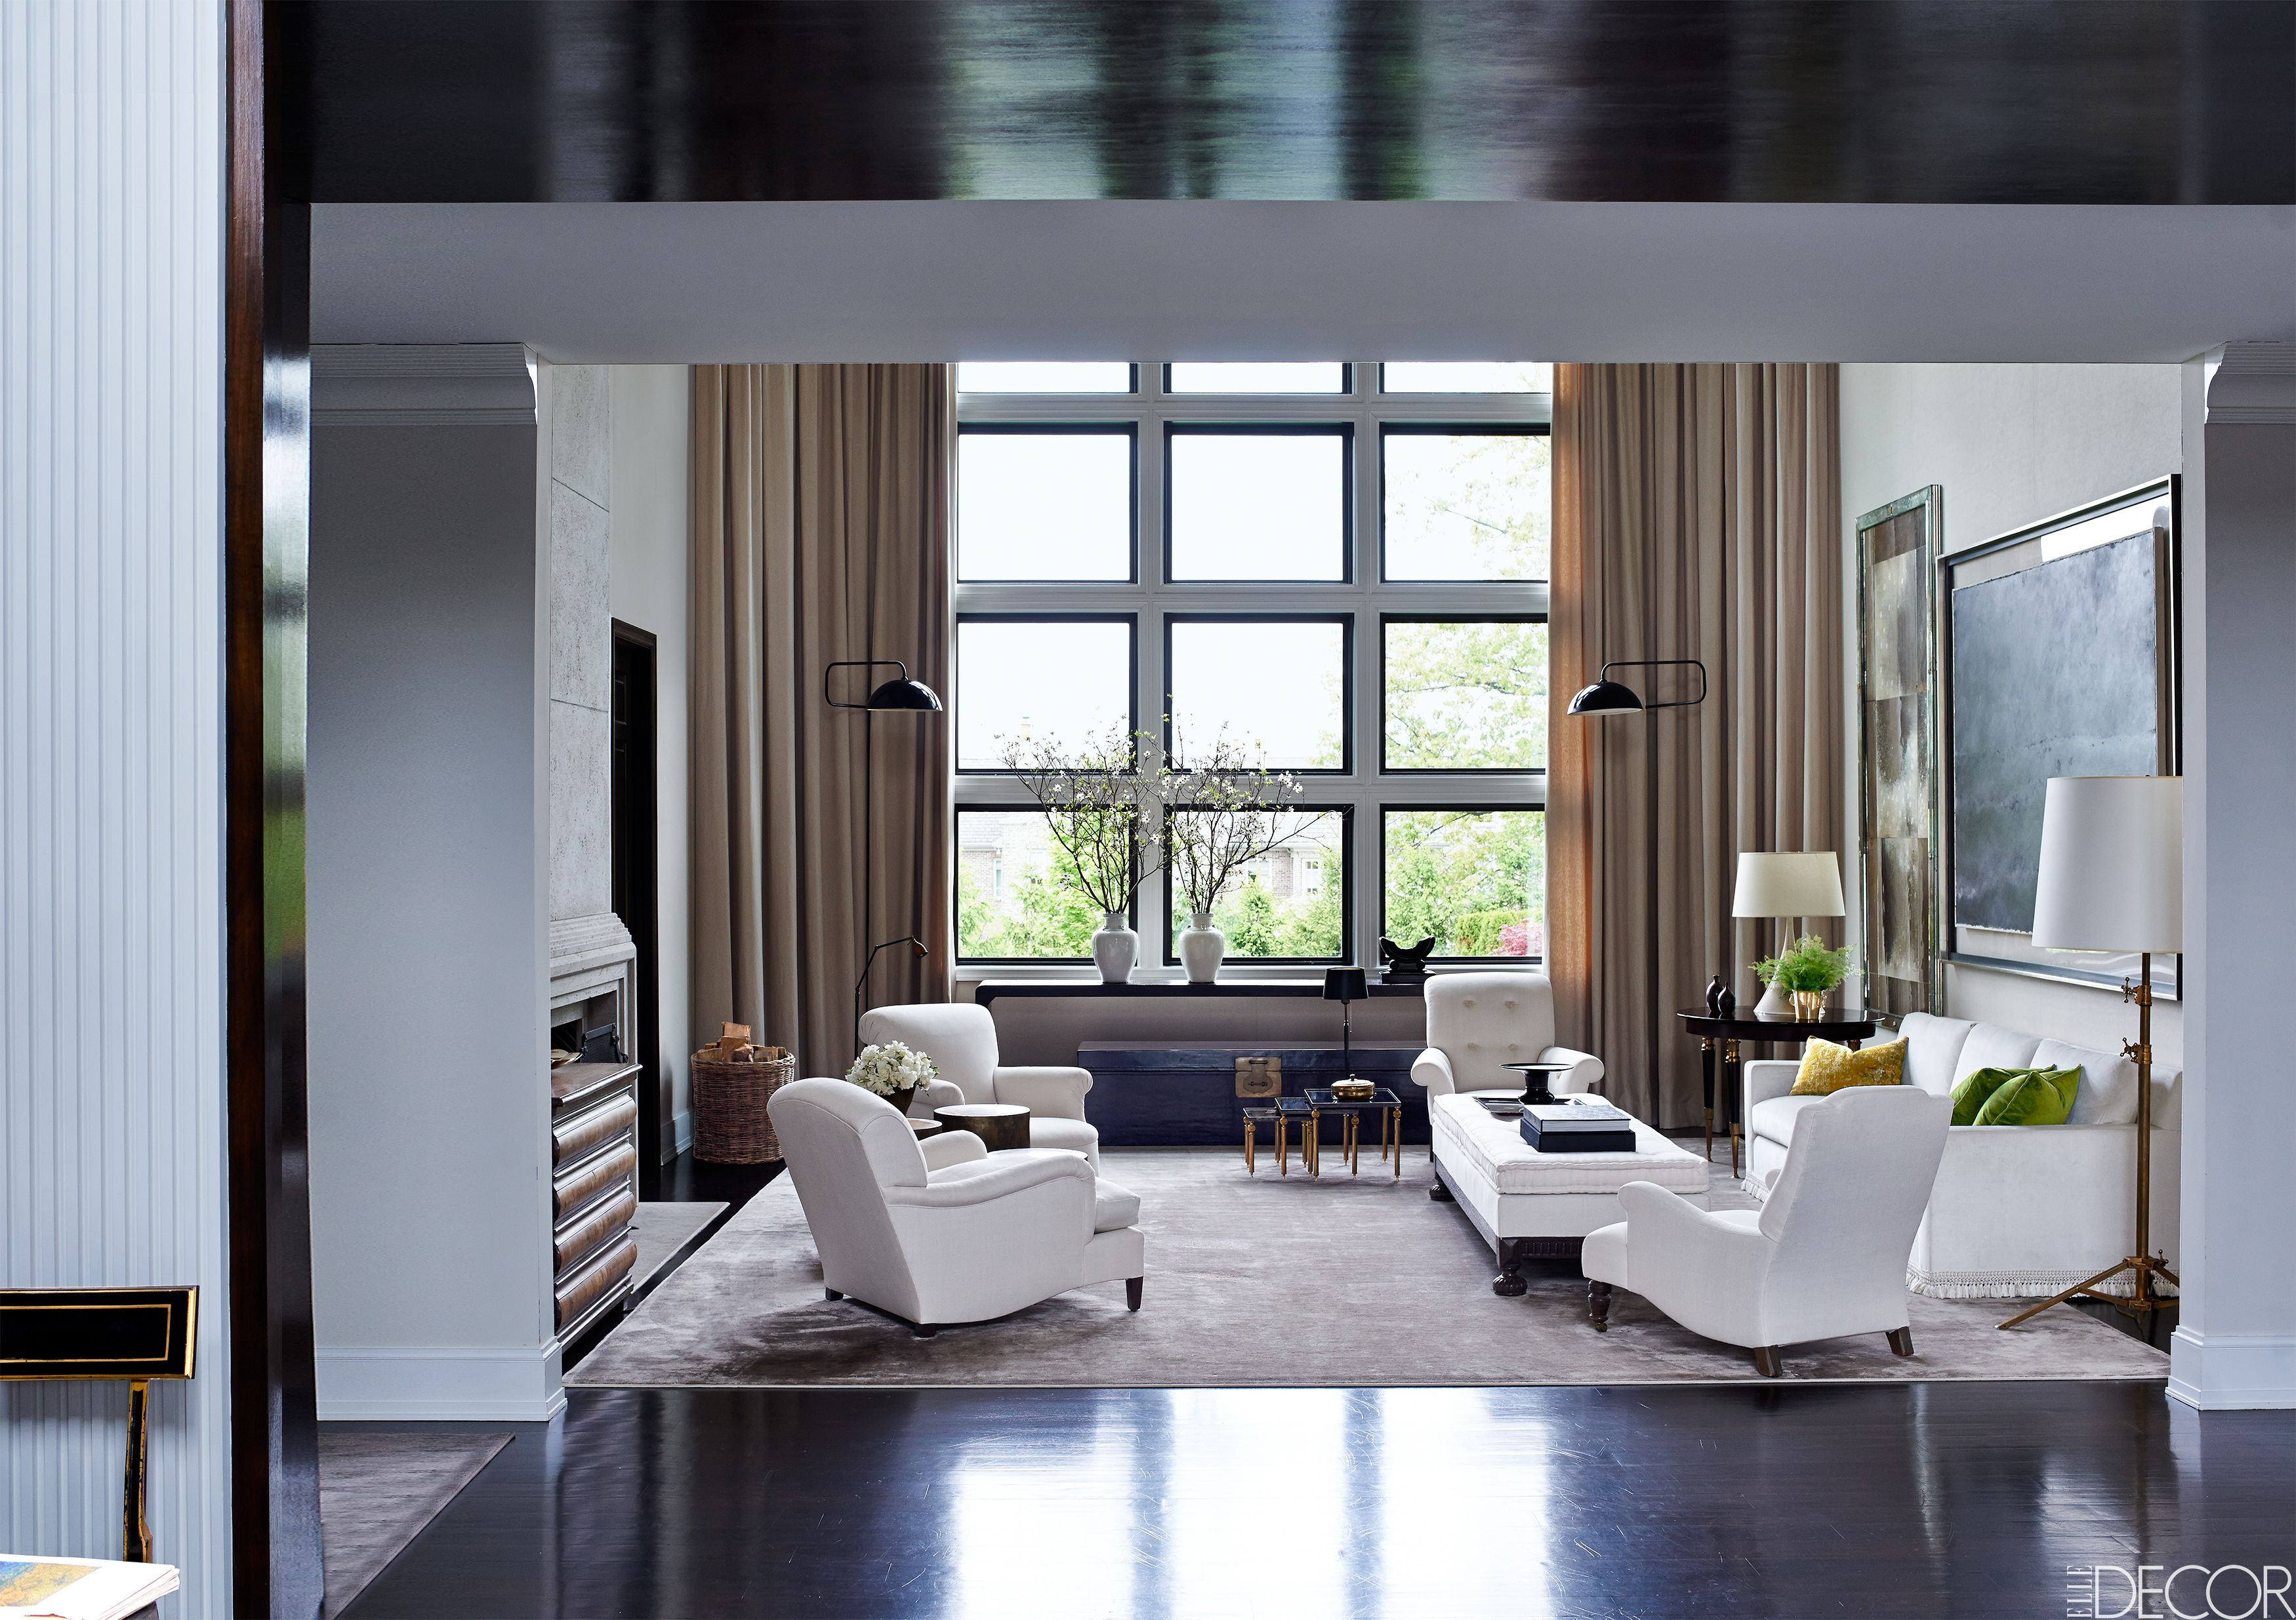 20 White Living Room Furniture Ideas